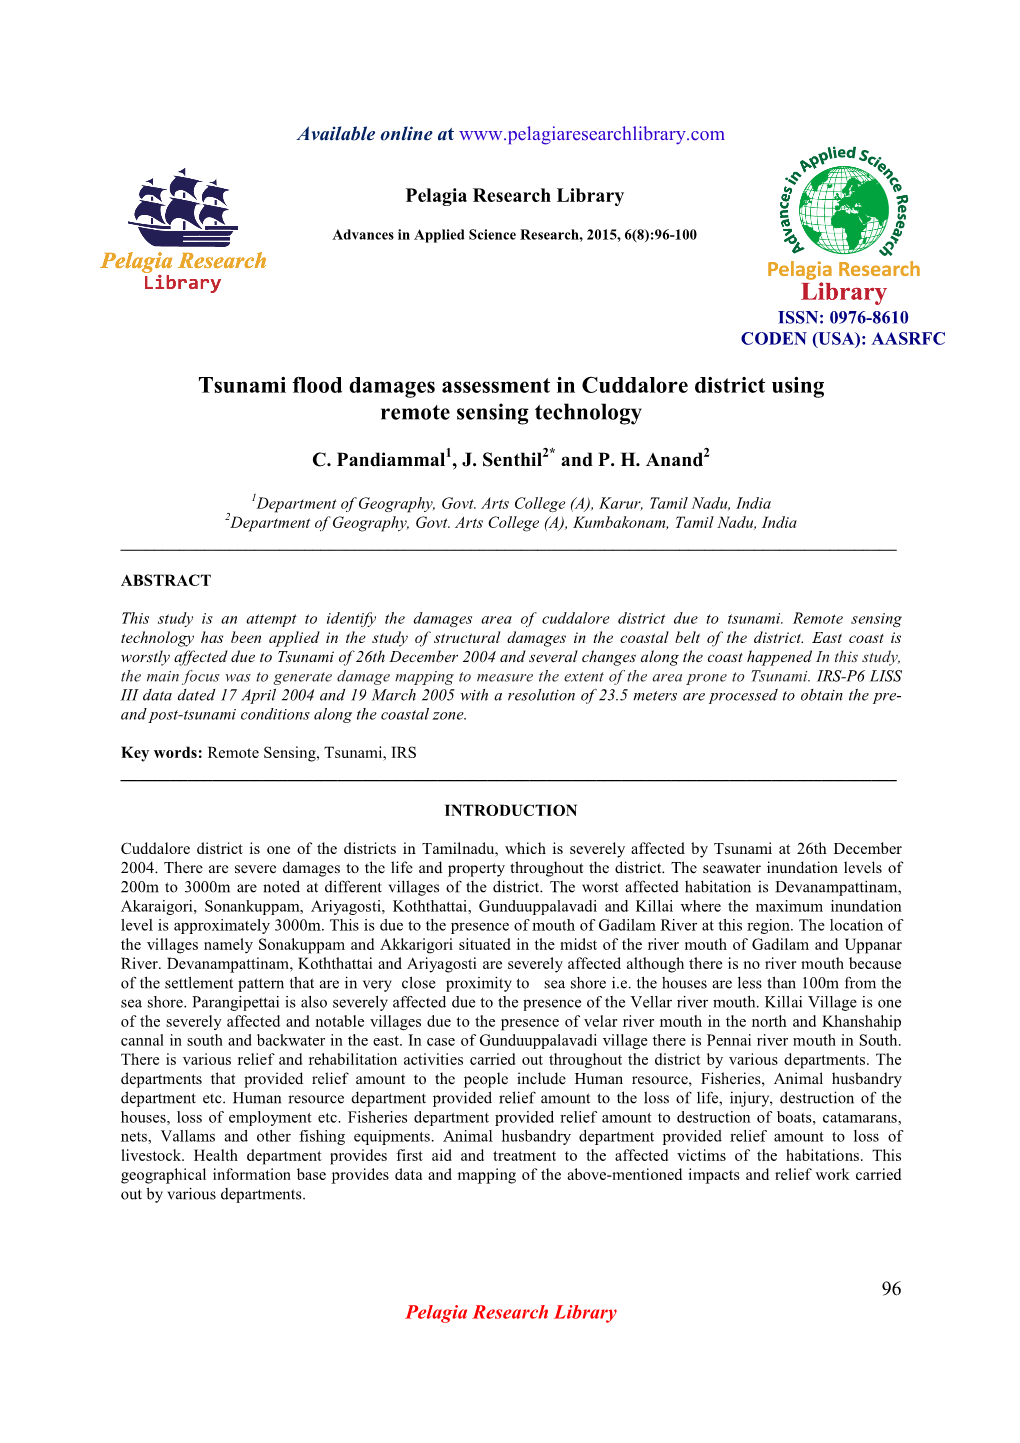 Tsunami Flood Damages Assessment in Cuddalore District Using Remote Sensing Technology